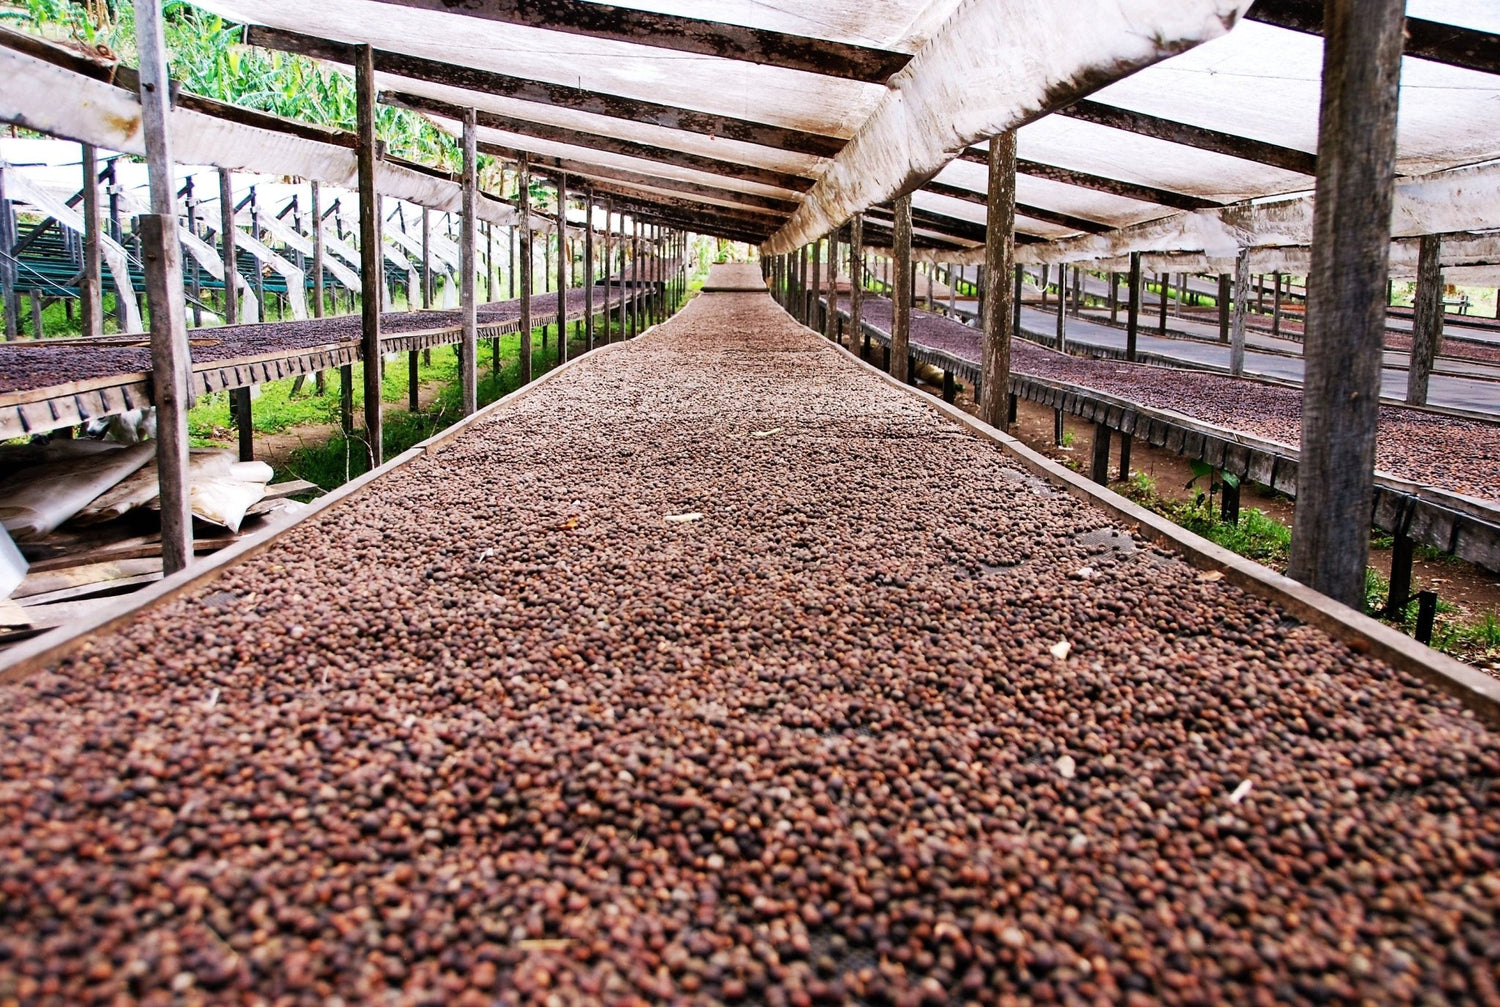 Panama Finca Hartmann Natural Gesha - Standout Coffee